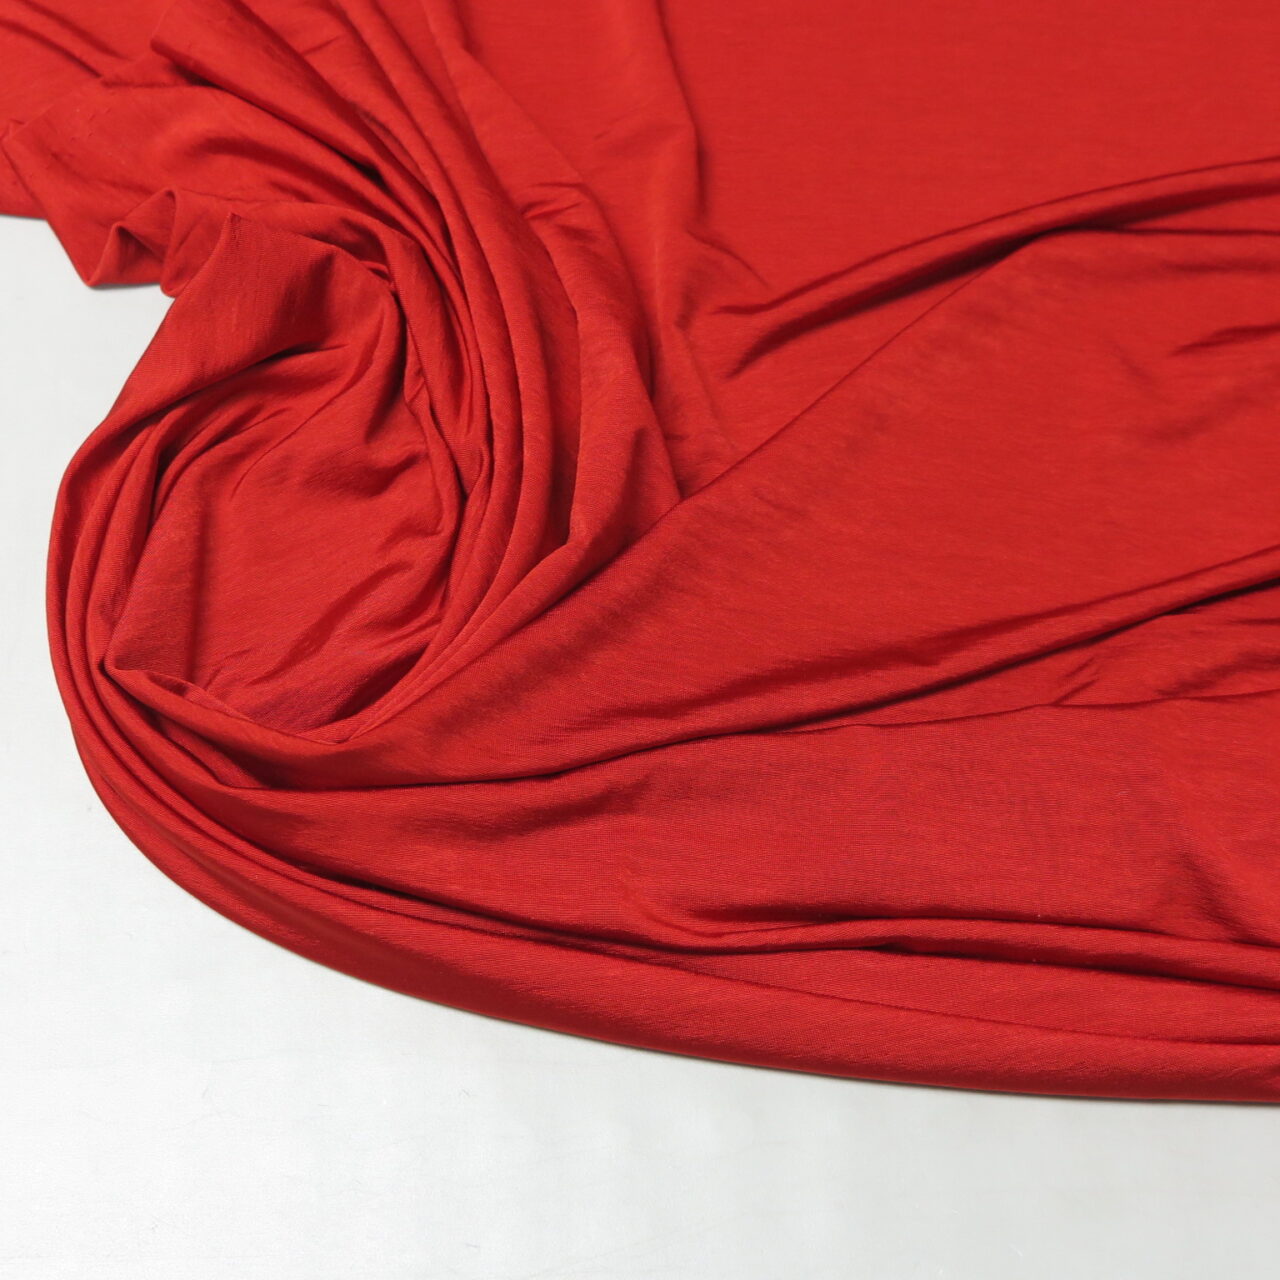 Jersey Knit Fabric, Scarlett Red, Shimmery Finish • Promenade Fine Fabrics